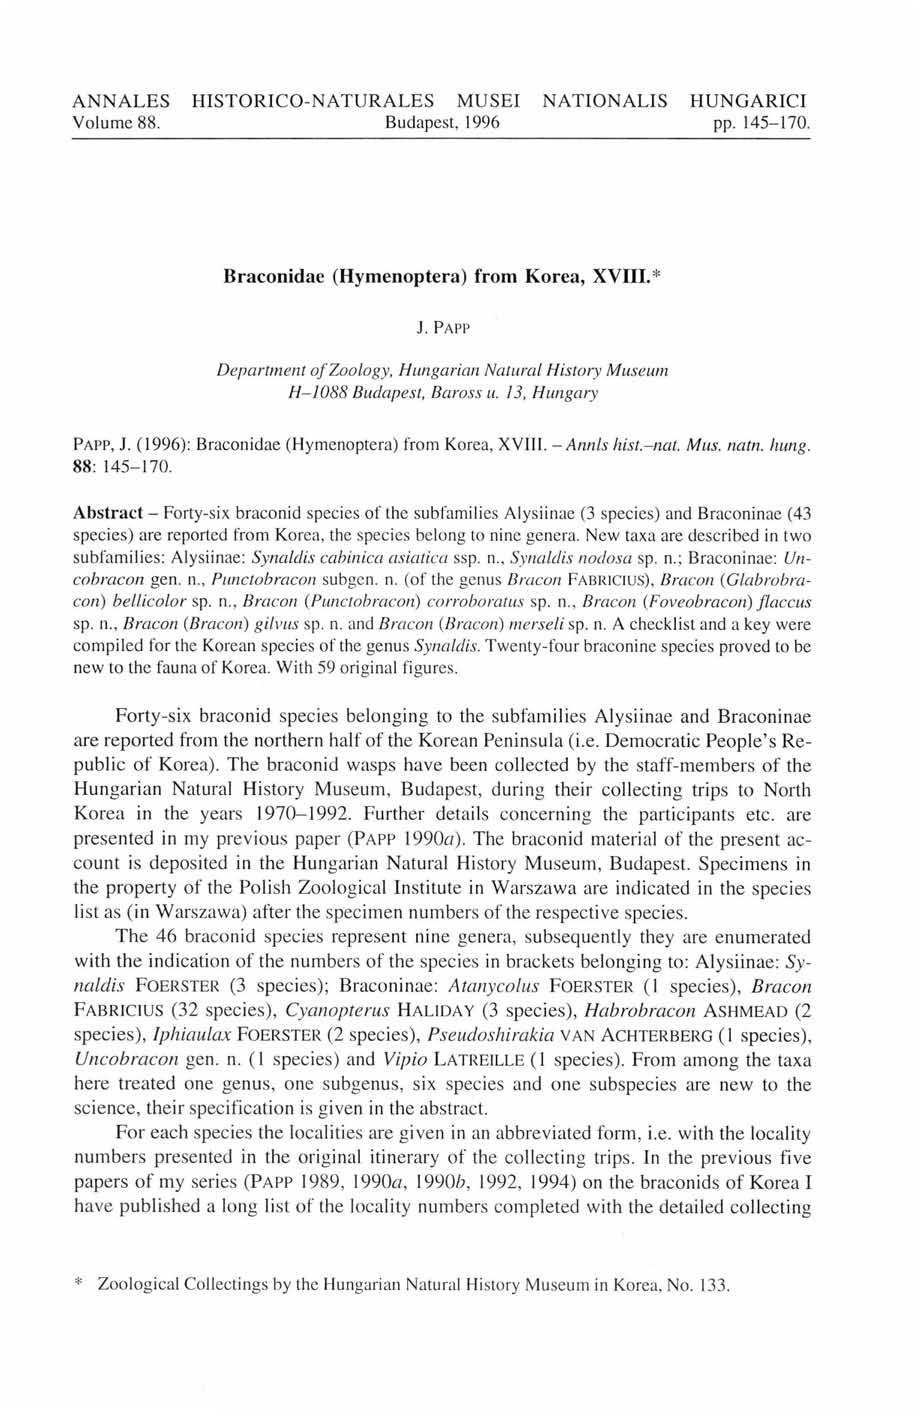 ANNALES HISTORICO-NATURALES MUSEI NATIONALIS HUNGARICI Volume 88. Budapest, 19% pp. 145-170. Braconidae (Hymenoptera) from Korea, XVIII. * J.